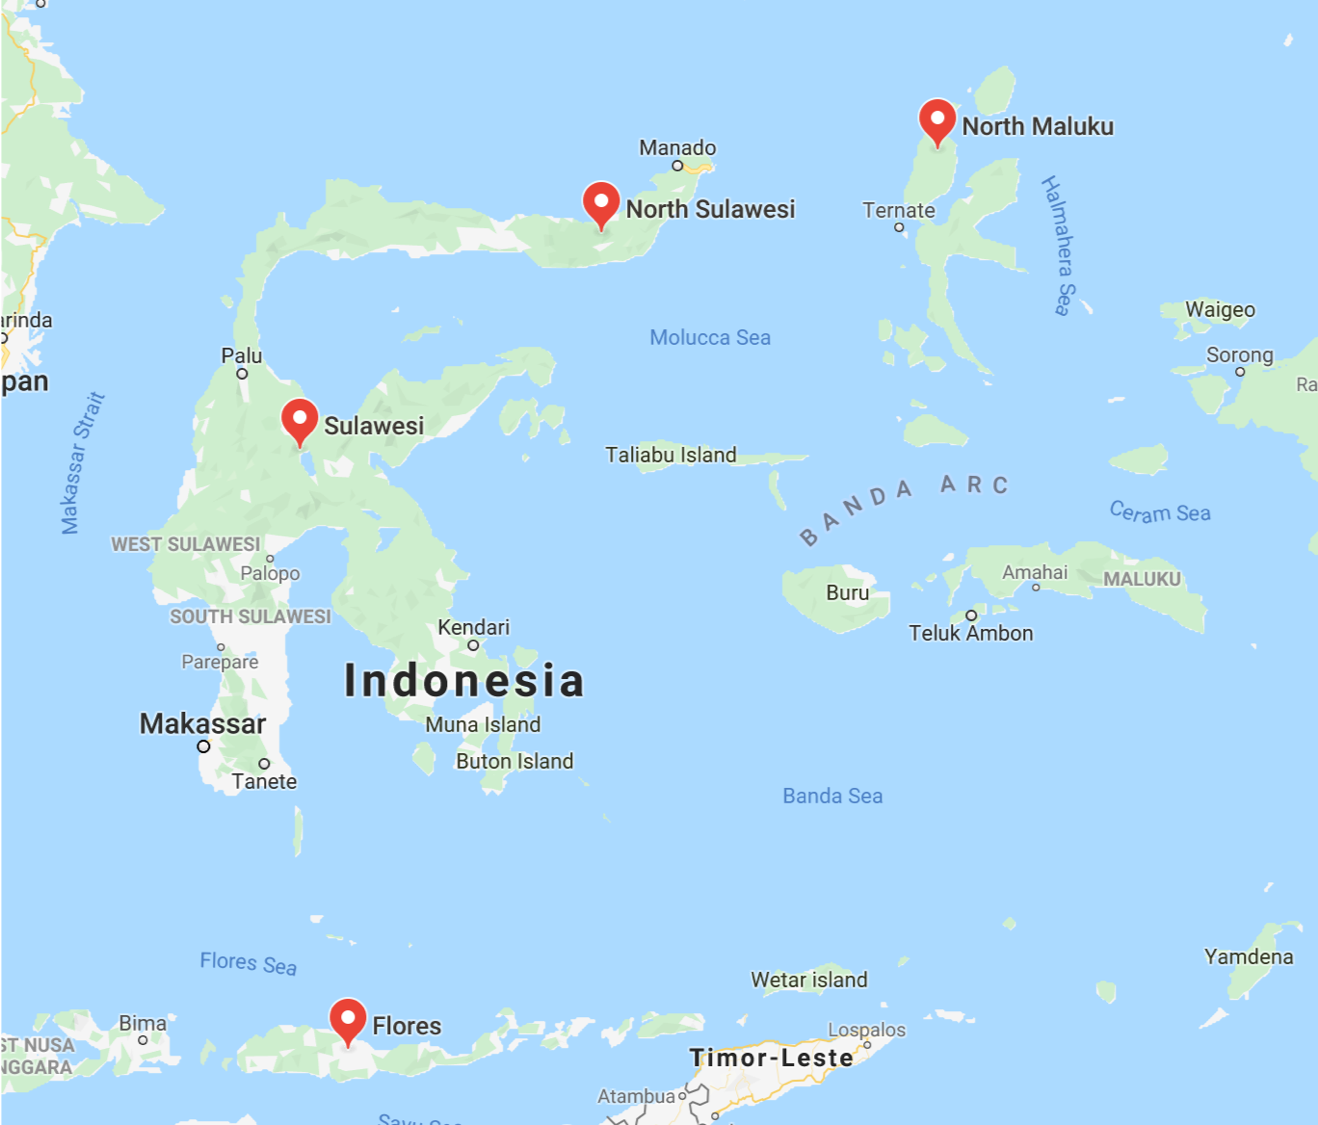 AP2HI - Indonesian Pole & Line and Handline Tuna Fisheries Association